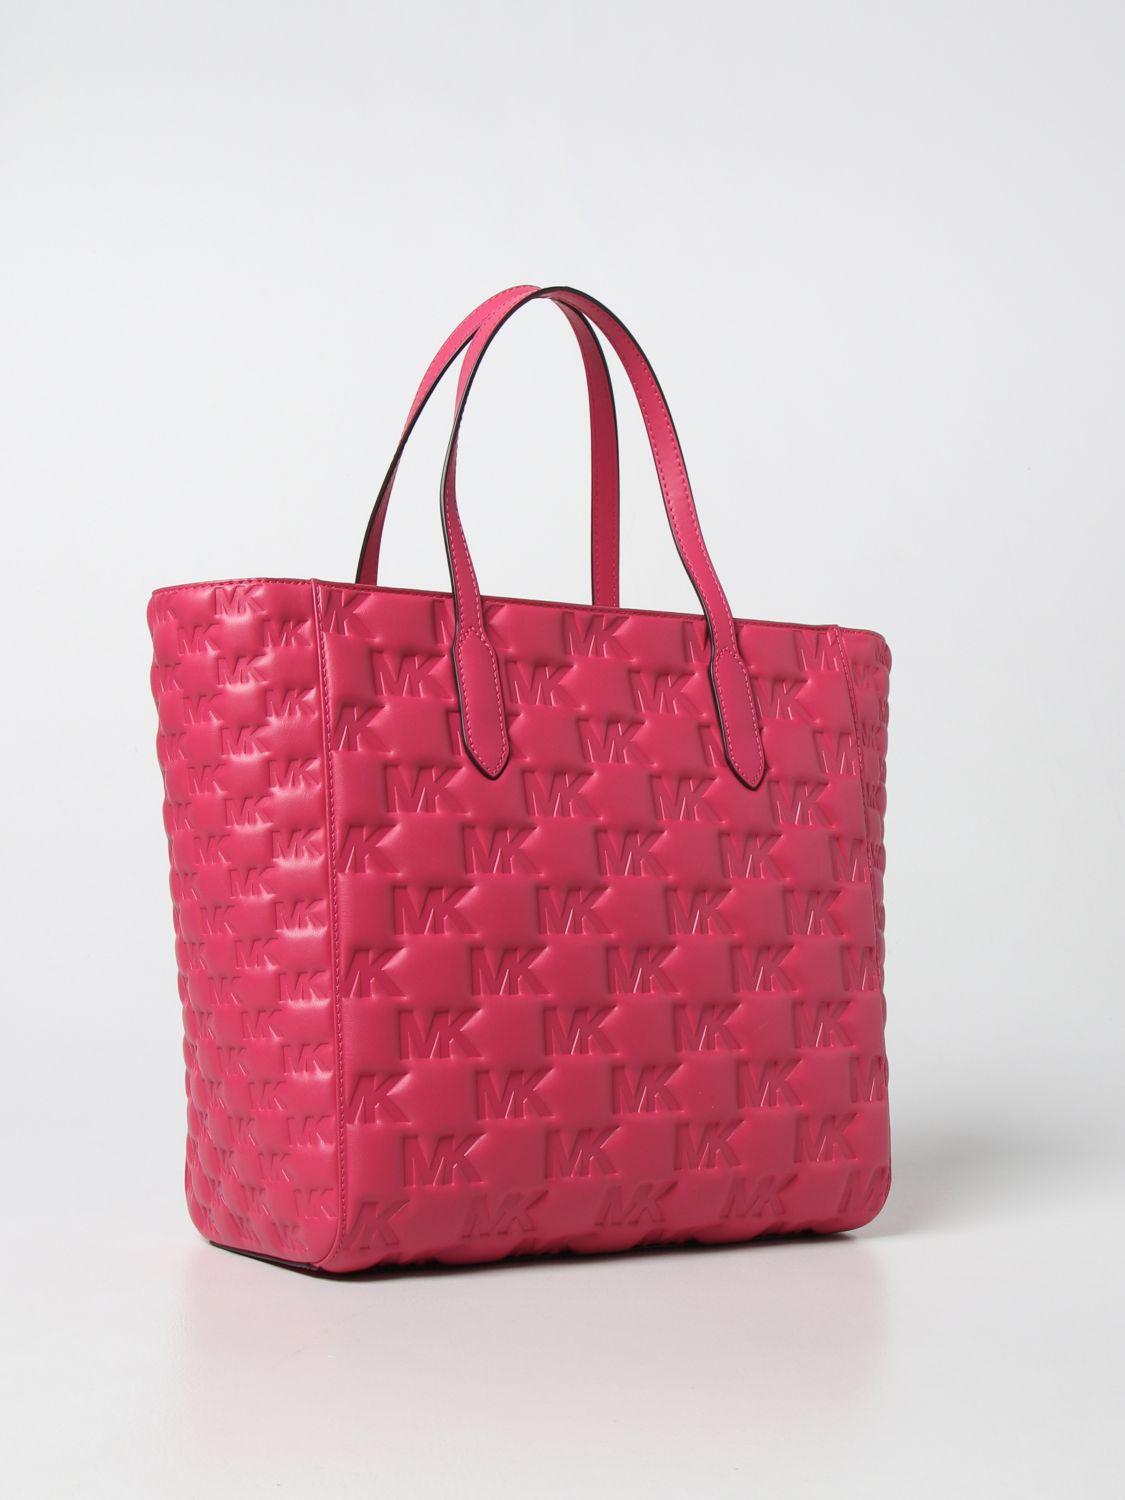 Authentic Michael Kors Jacquard Tote Bag, Women's Fashion, Bags